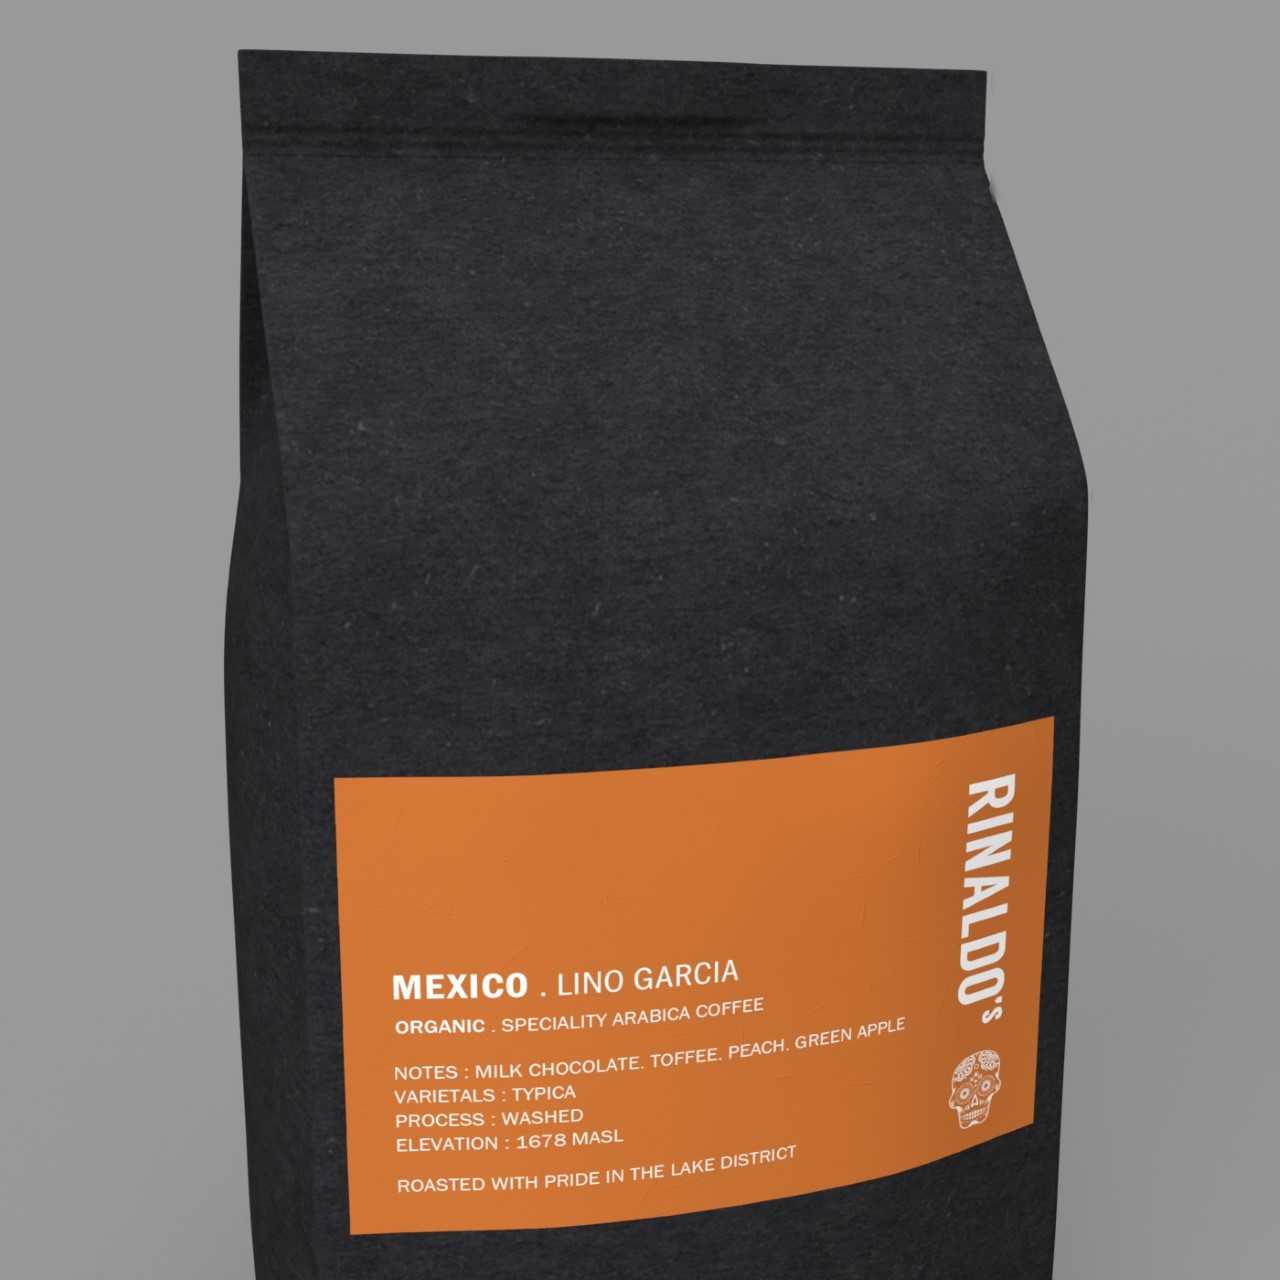 Mexico Linio Garcia coffee bag